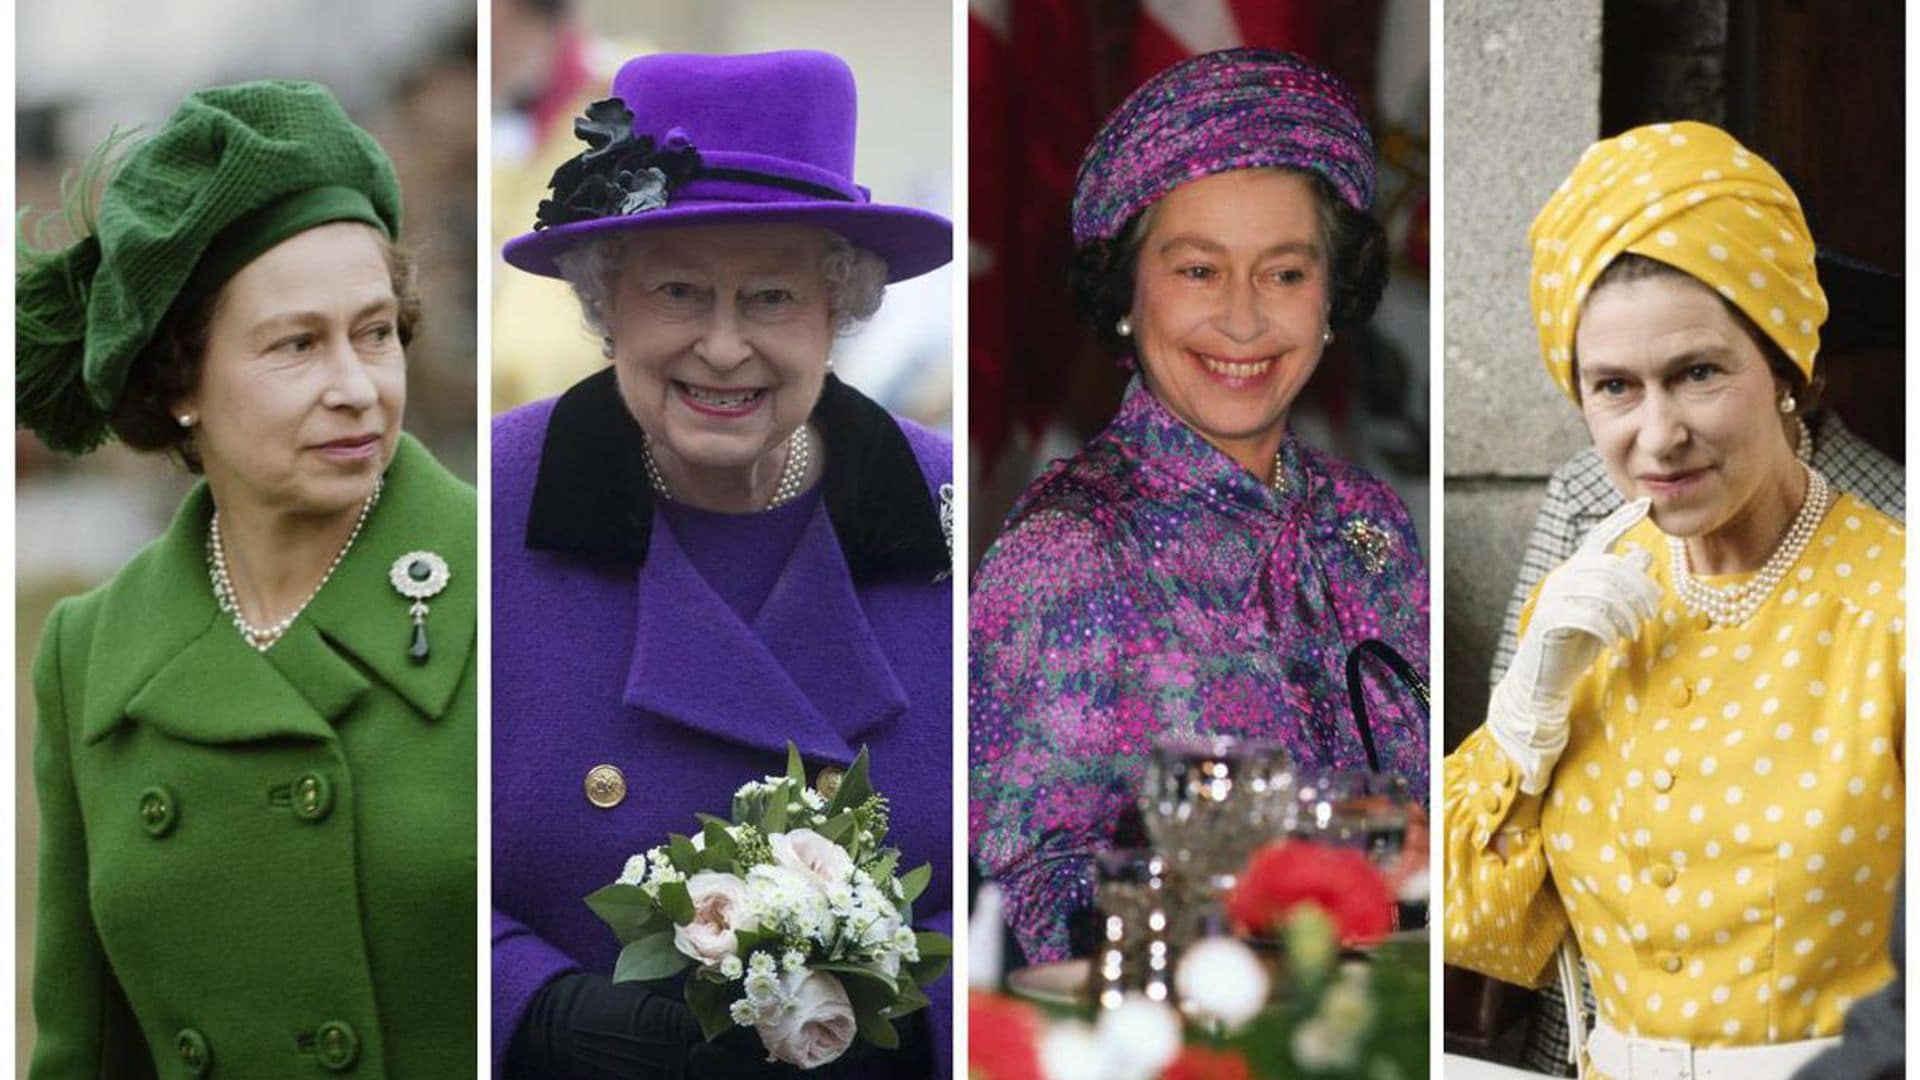 Queen Elizabeth II’s favorite styles of hats through the years